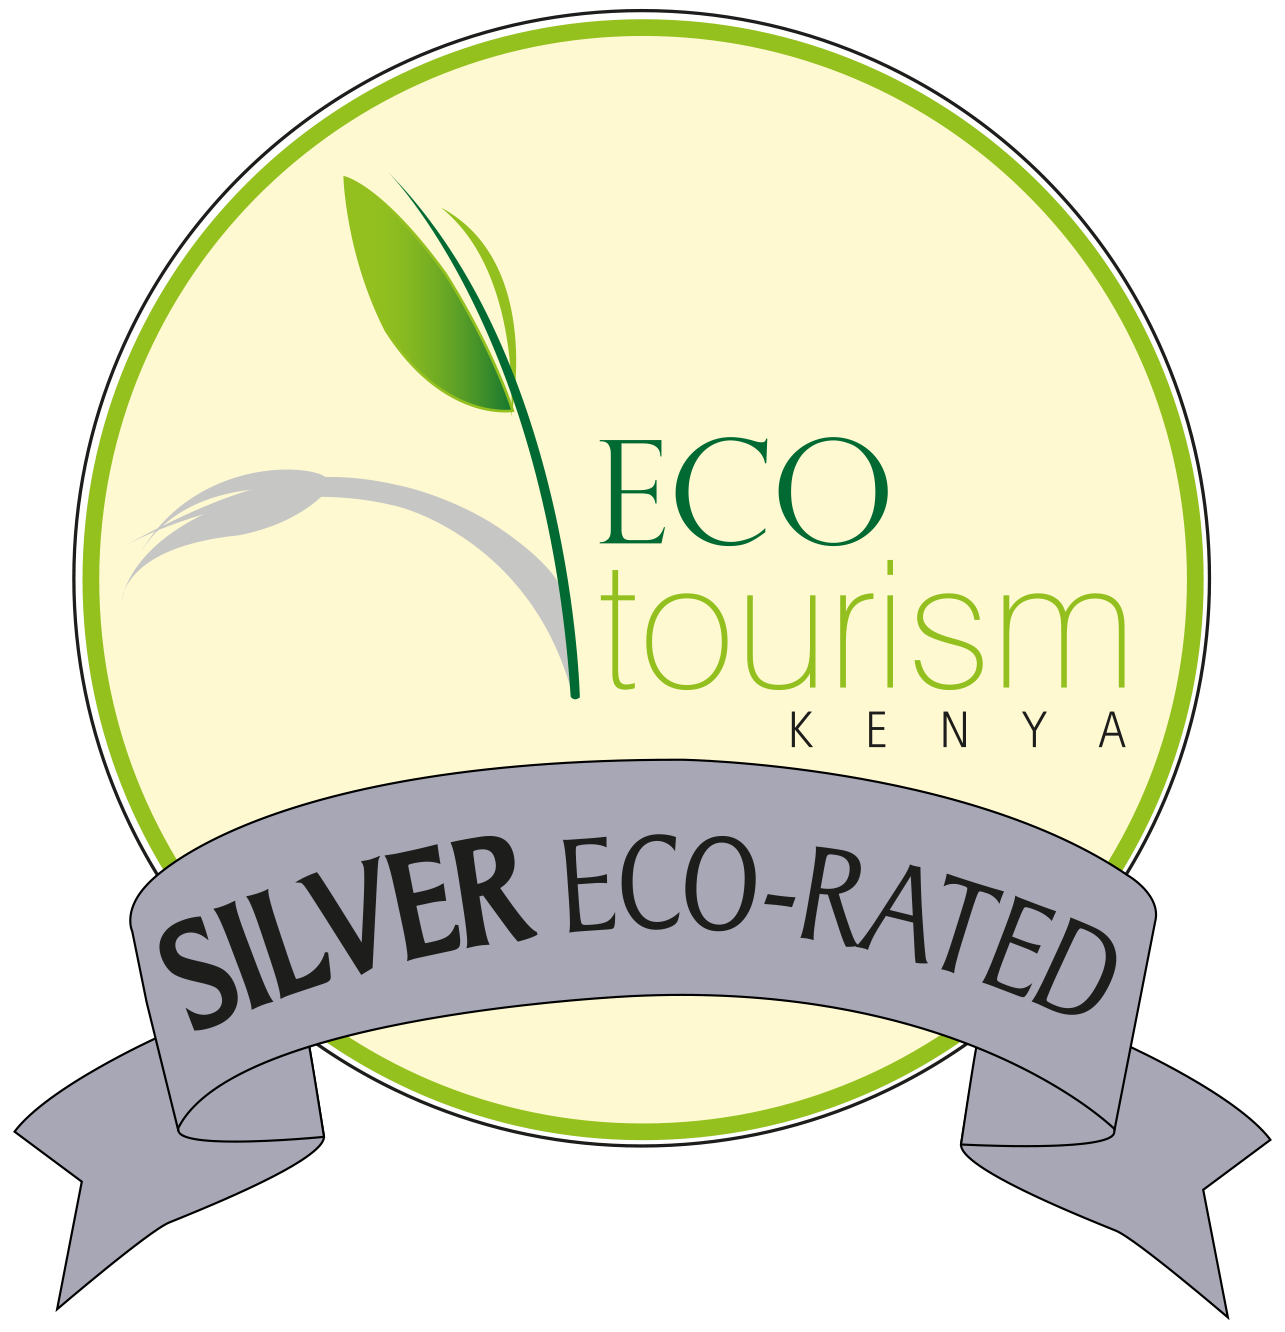 Silver Eco Rates